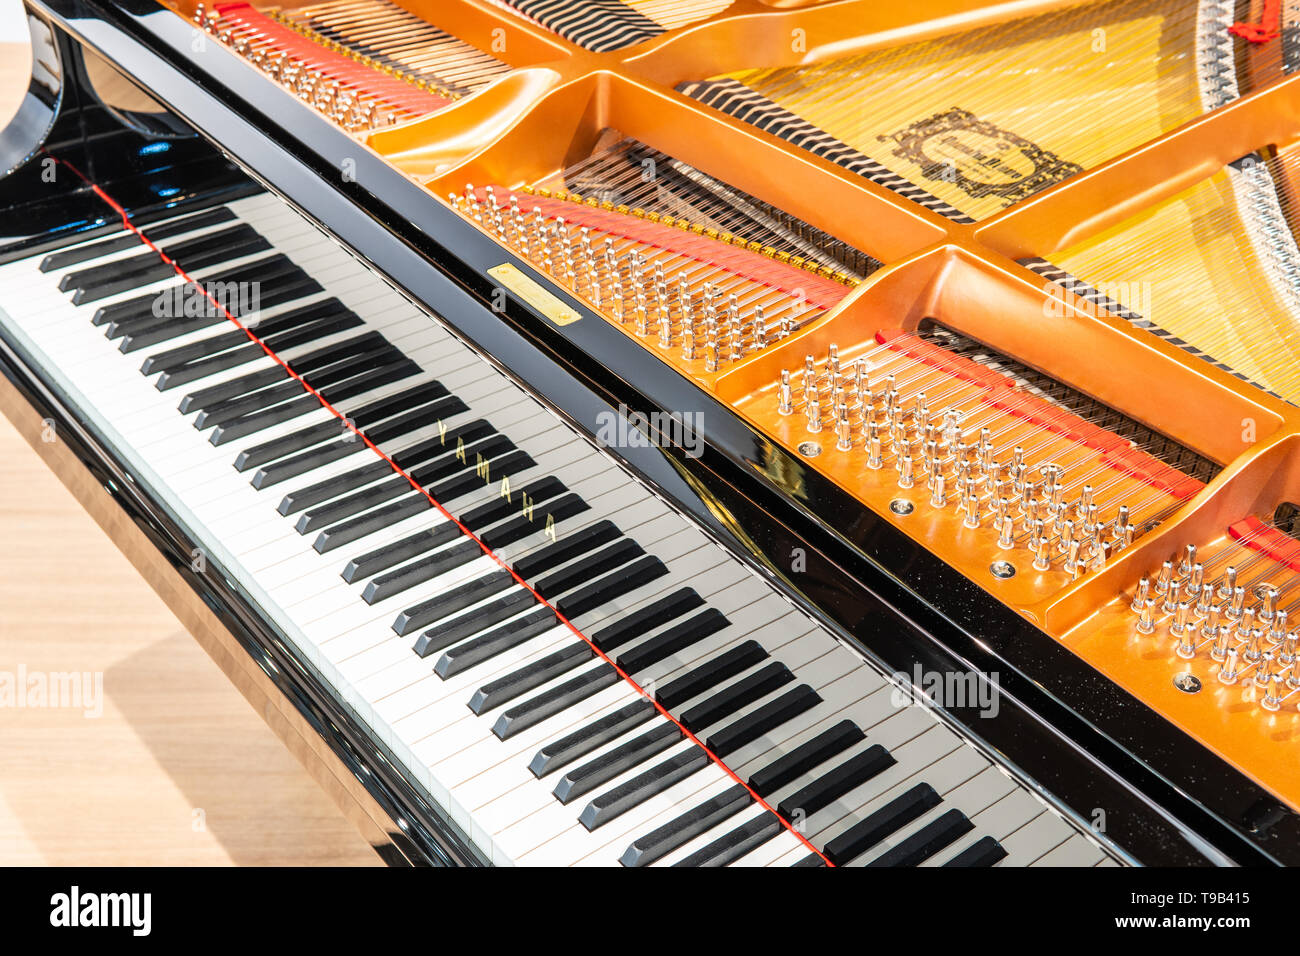 Berlin, Allemagne, le 30 août 2018, white et black keys dans Yamaha piano  au Yamaha Music Europe Exposition Exposition à l'IFA 2018 Innovations  mondiales montrent Photo Stock - Alamy